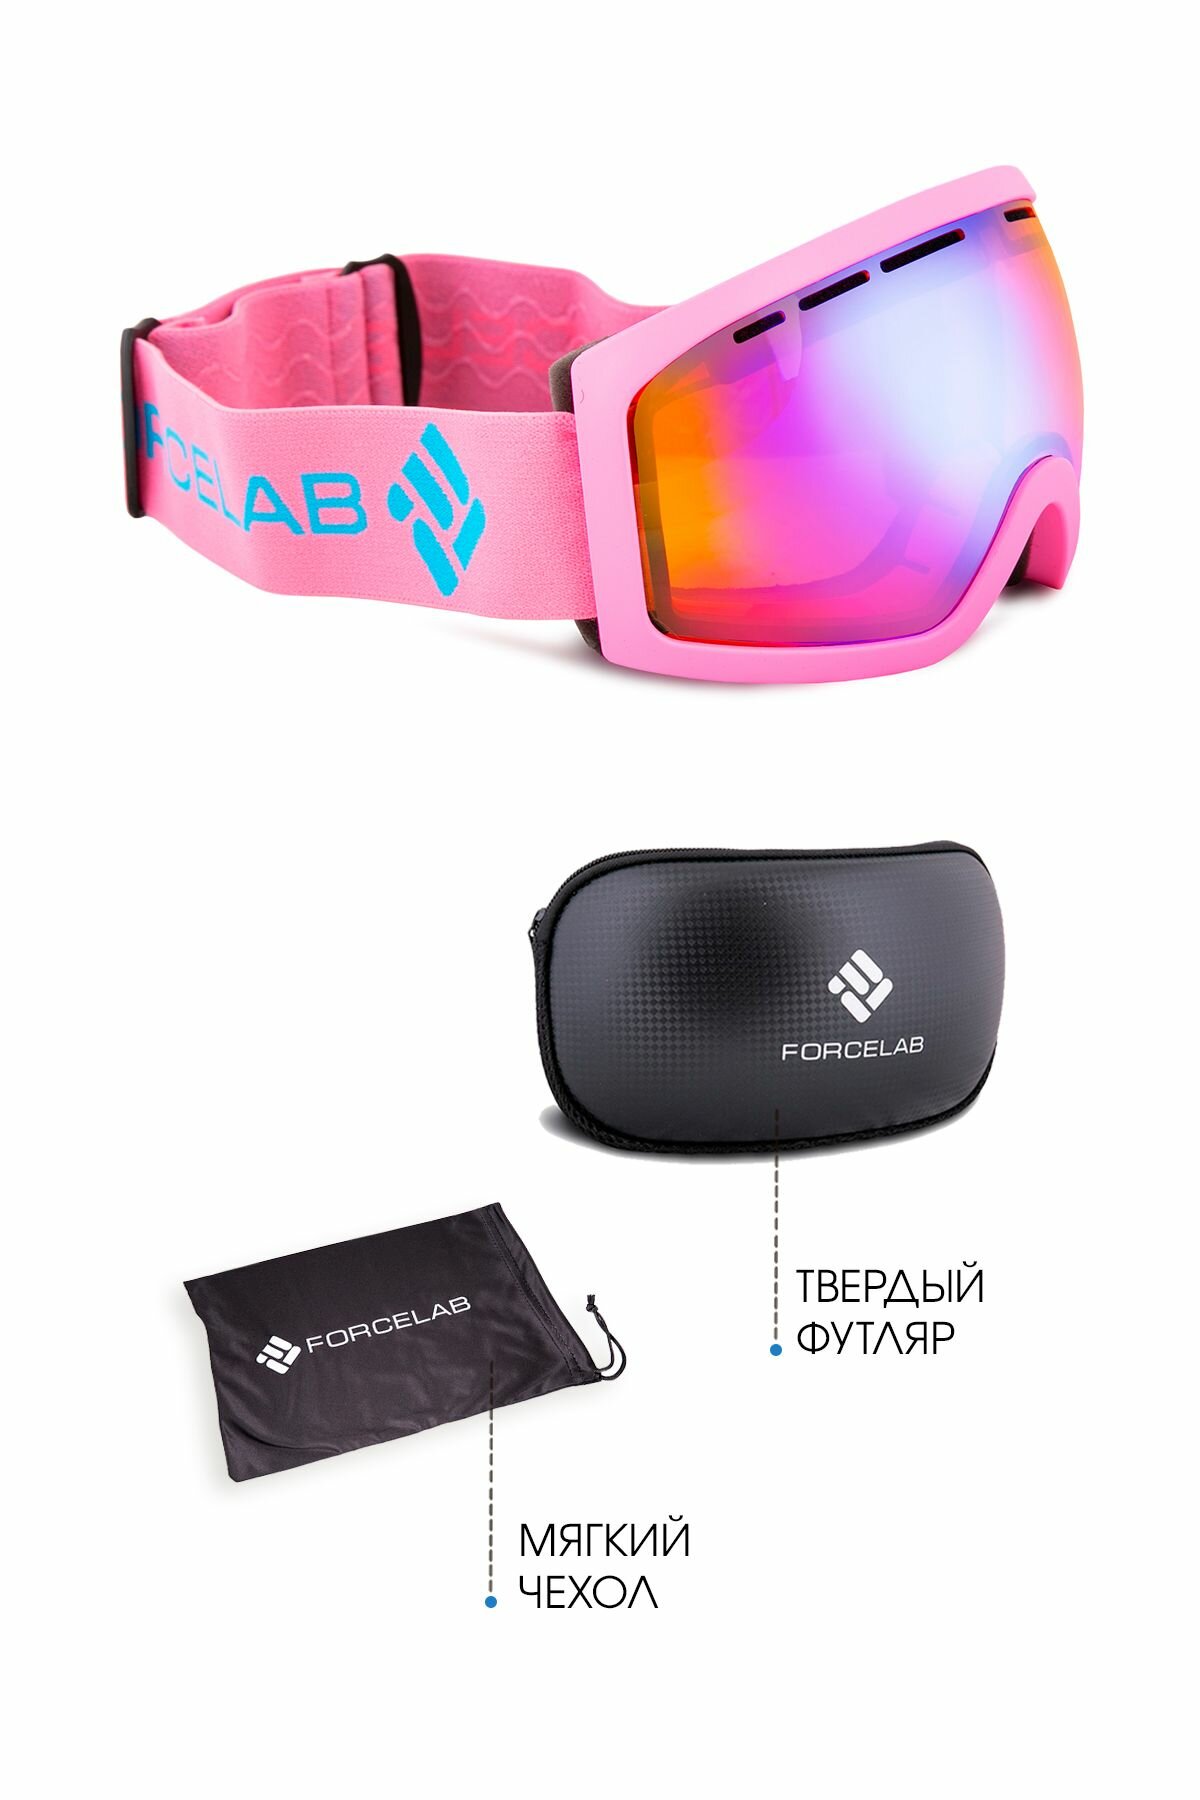 Маска горнолыжная, защитная, очки горнолыжные, защитные FORCELAB, светло-розовый